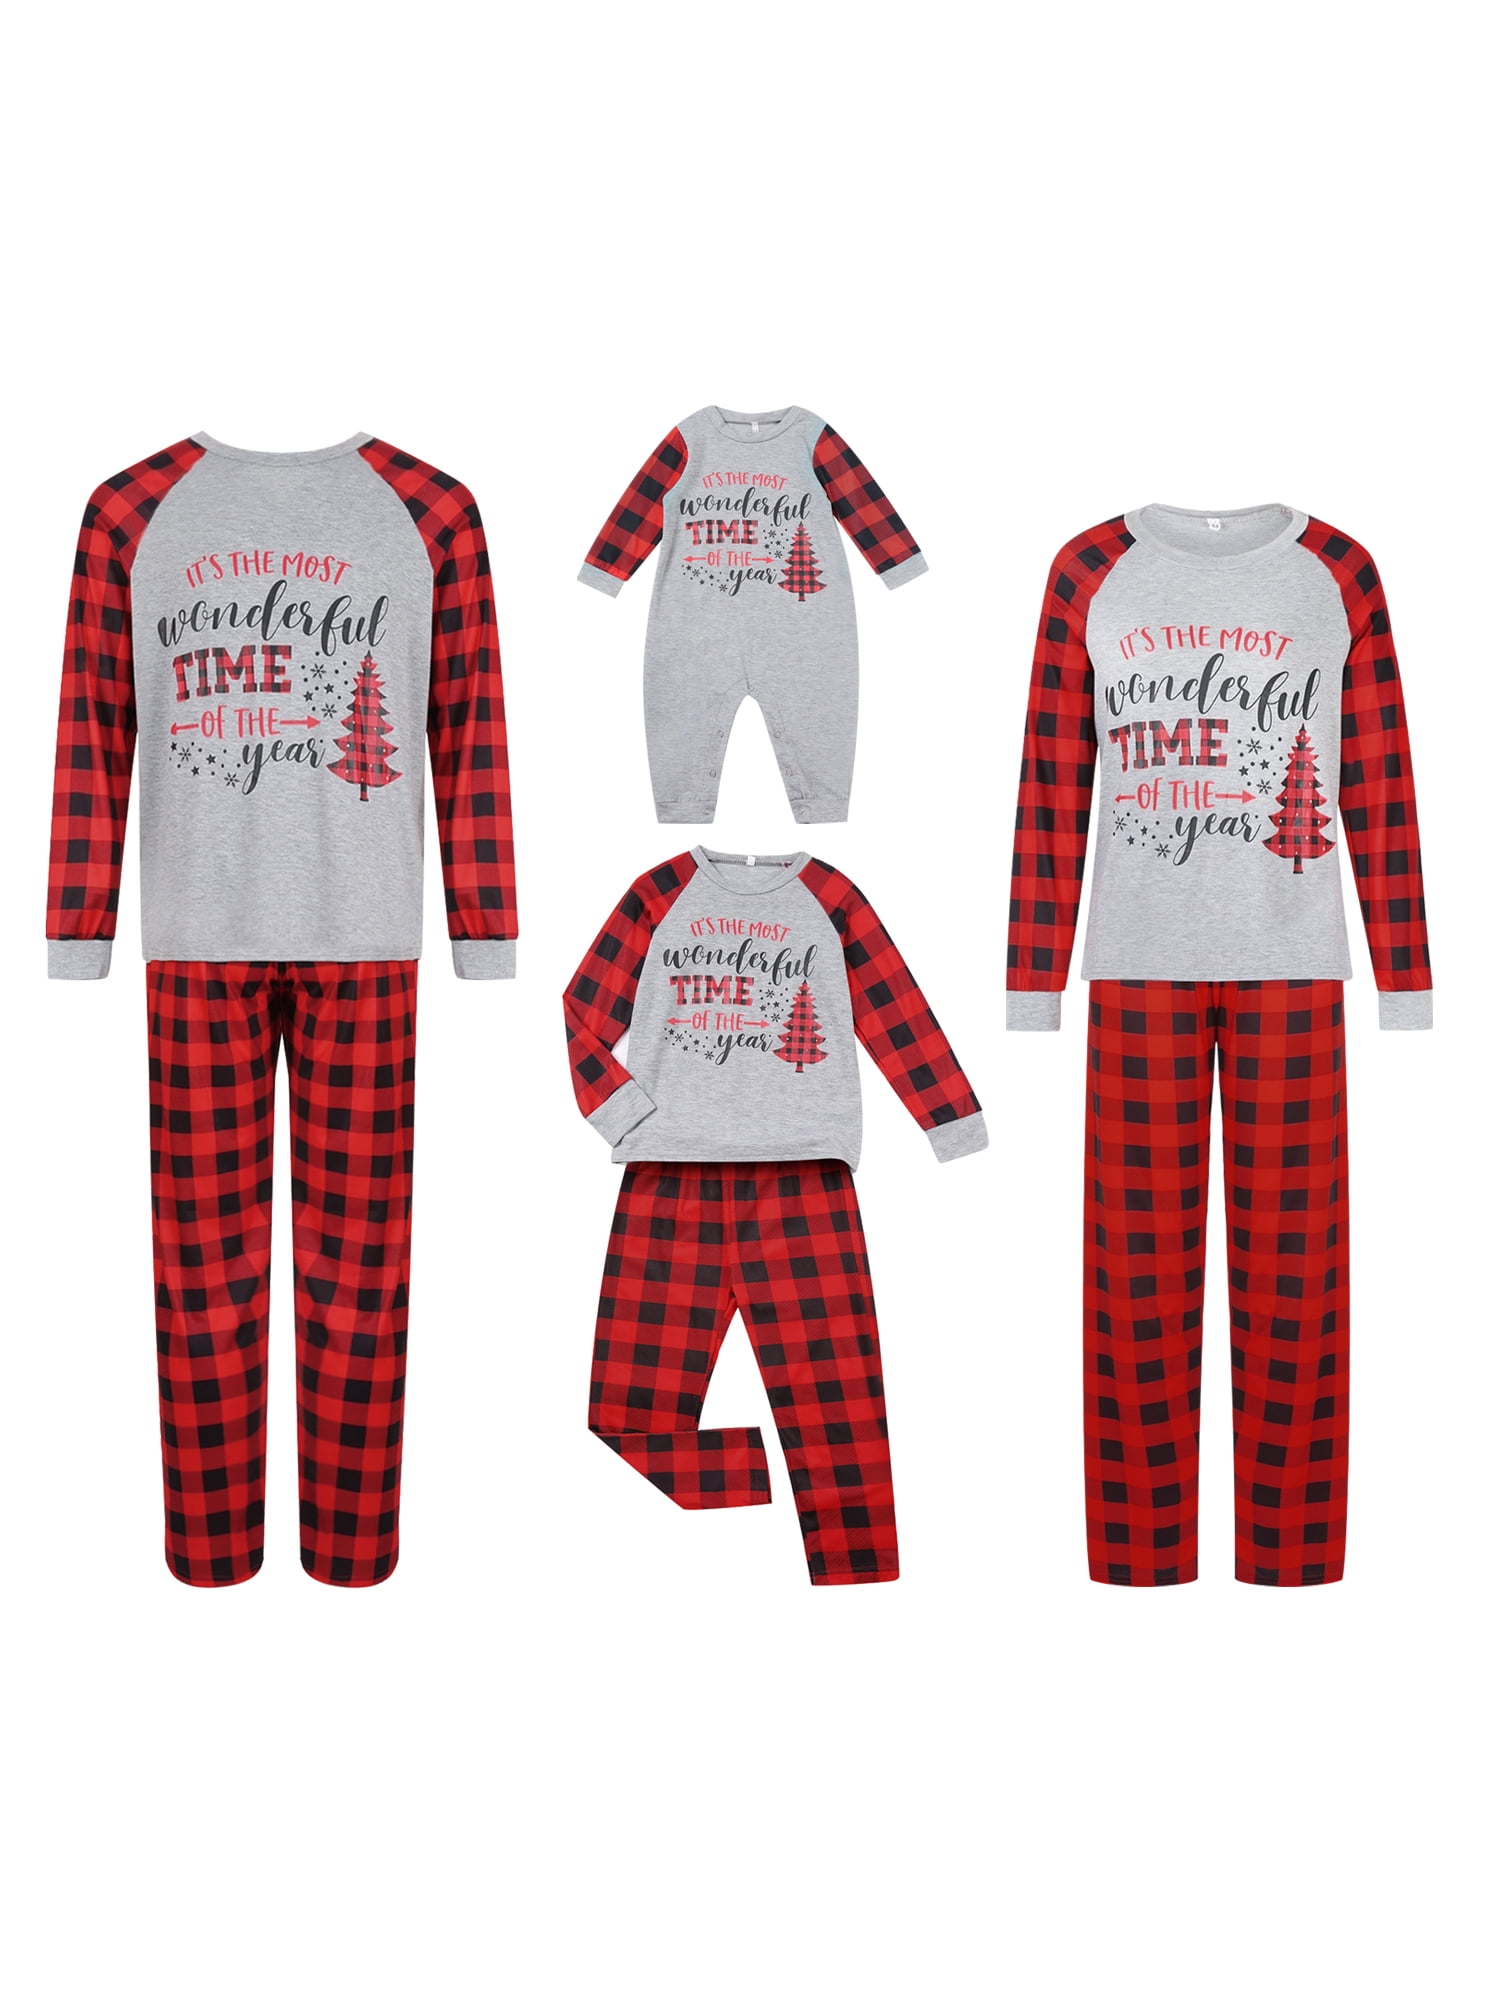 Afunbaby Christmas Family Matching Pajamas Sets, Xmas Pjs Plaid ...